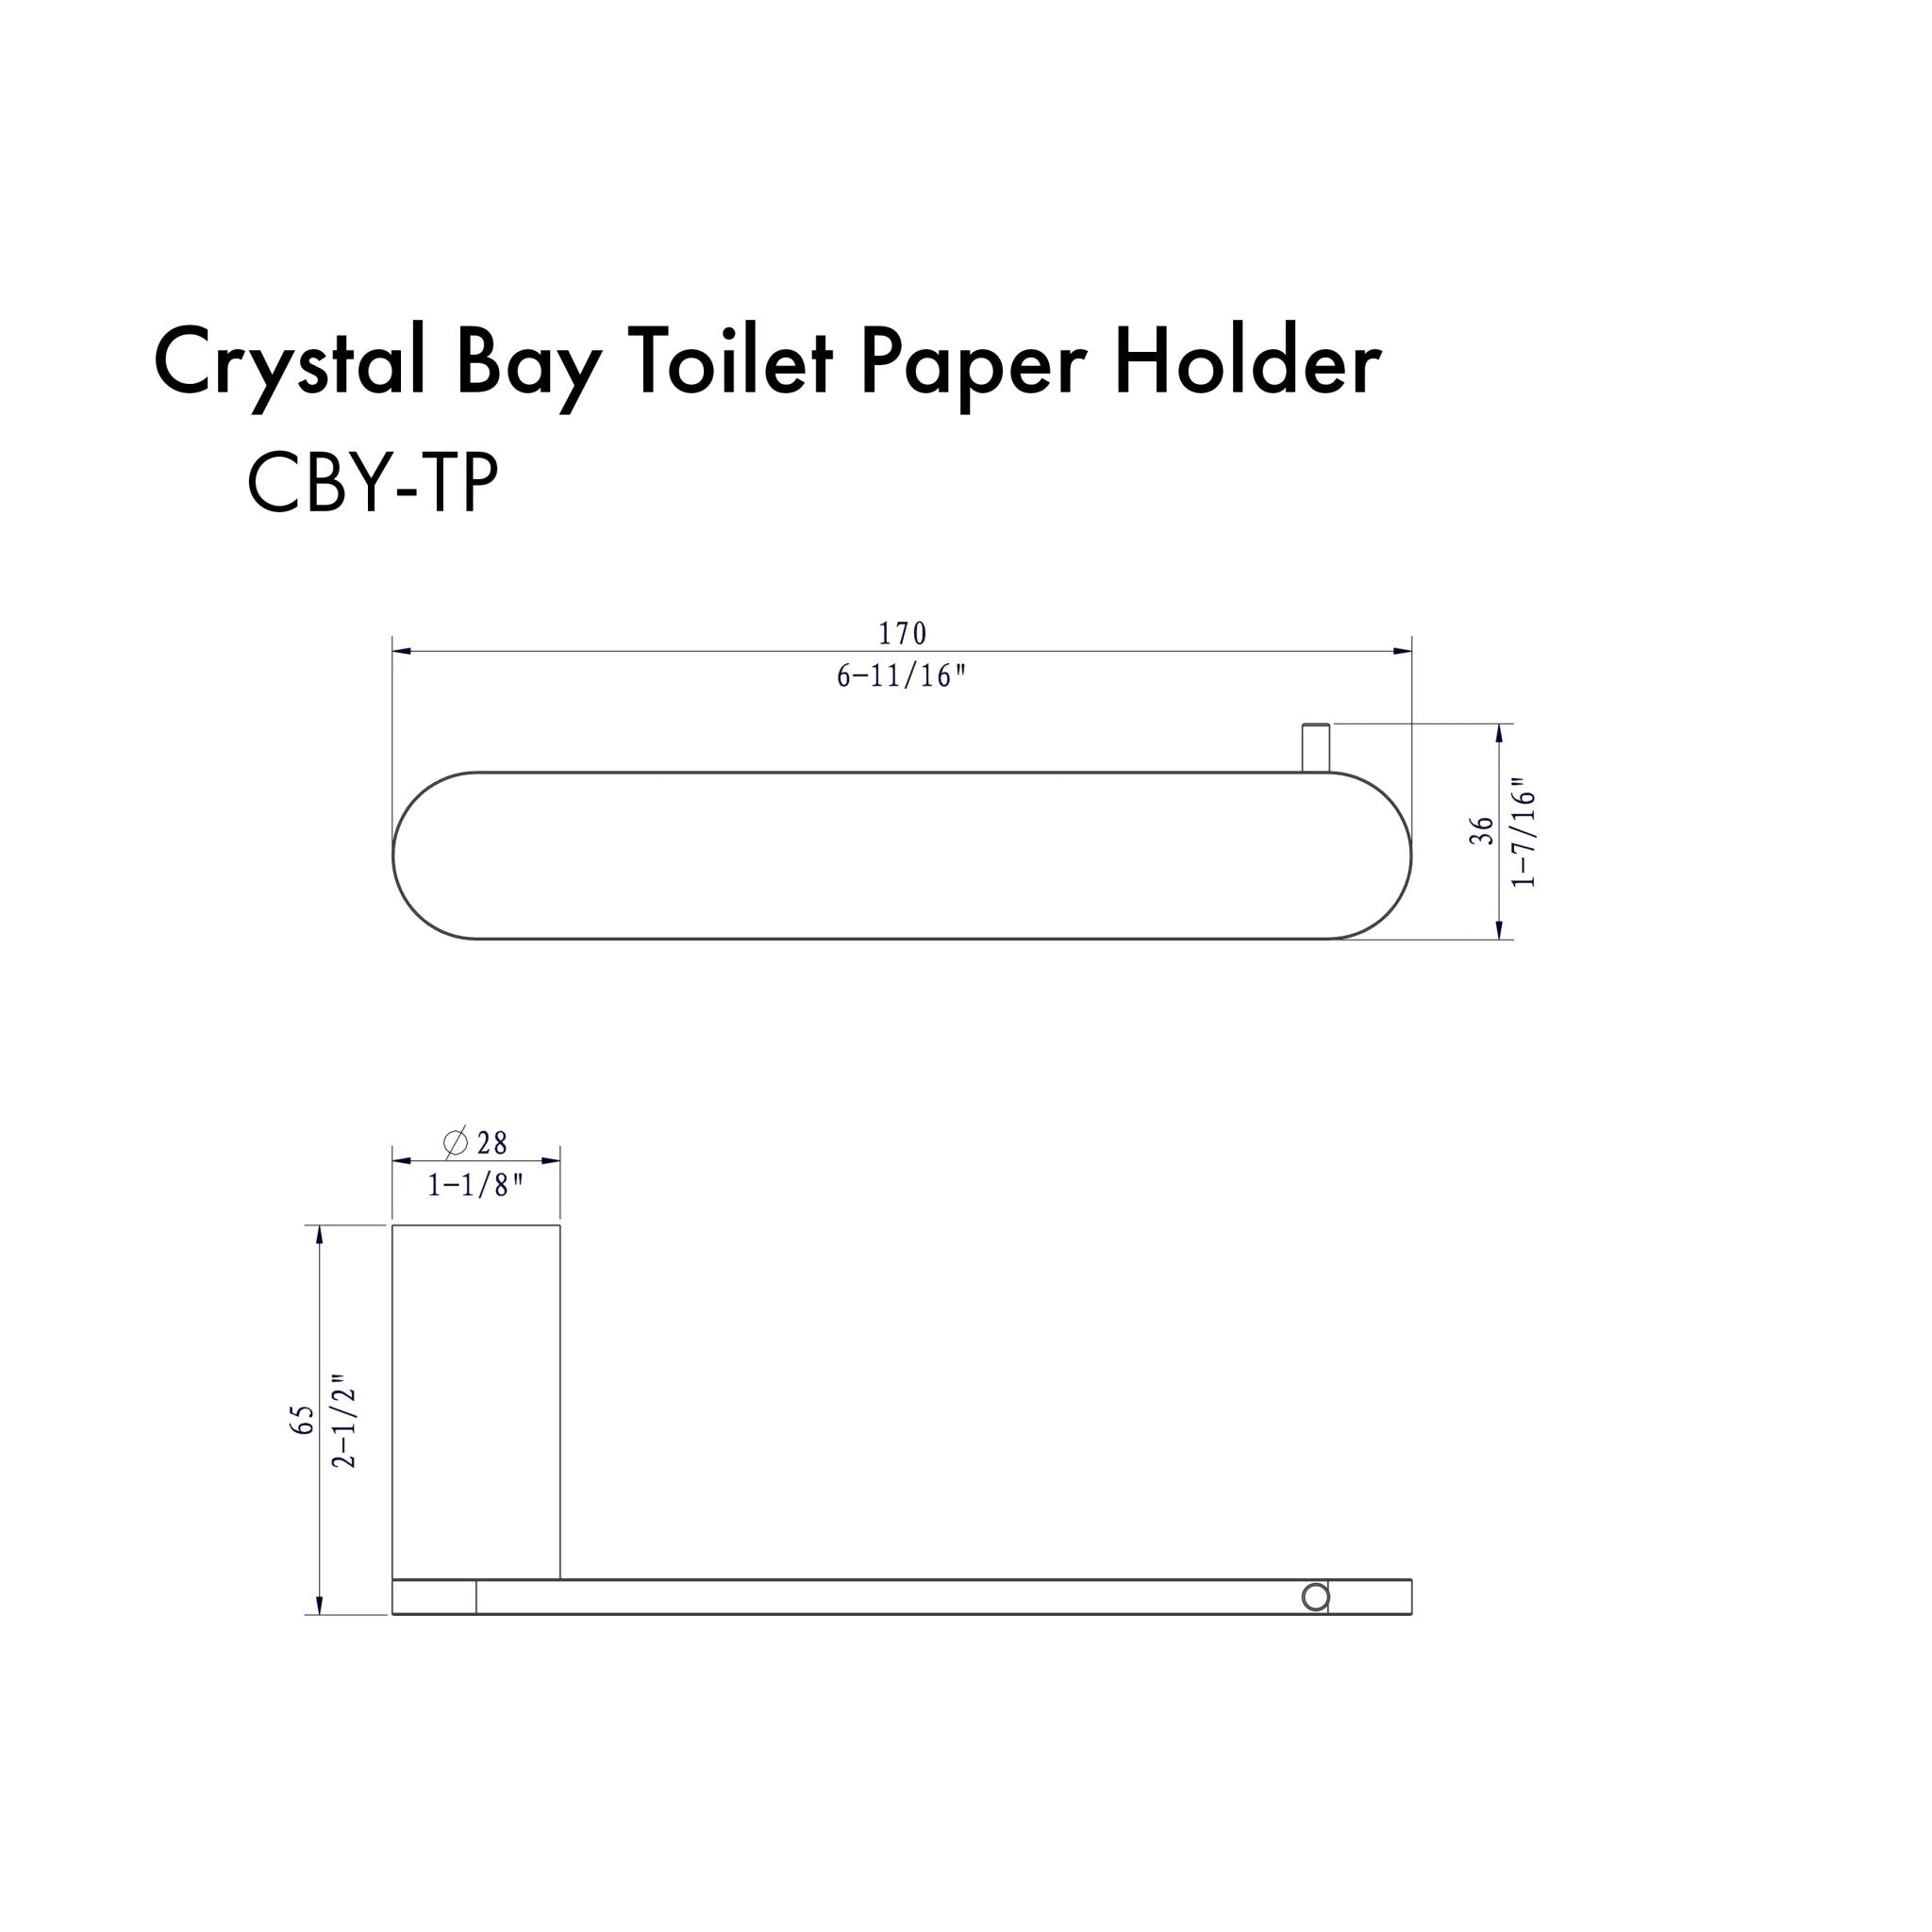 ZLINE Crystal Bay Toilet Paper Holder with Color Options (CBY-TP) dimensional diagram